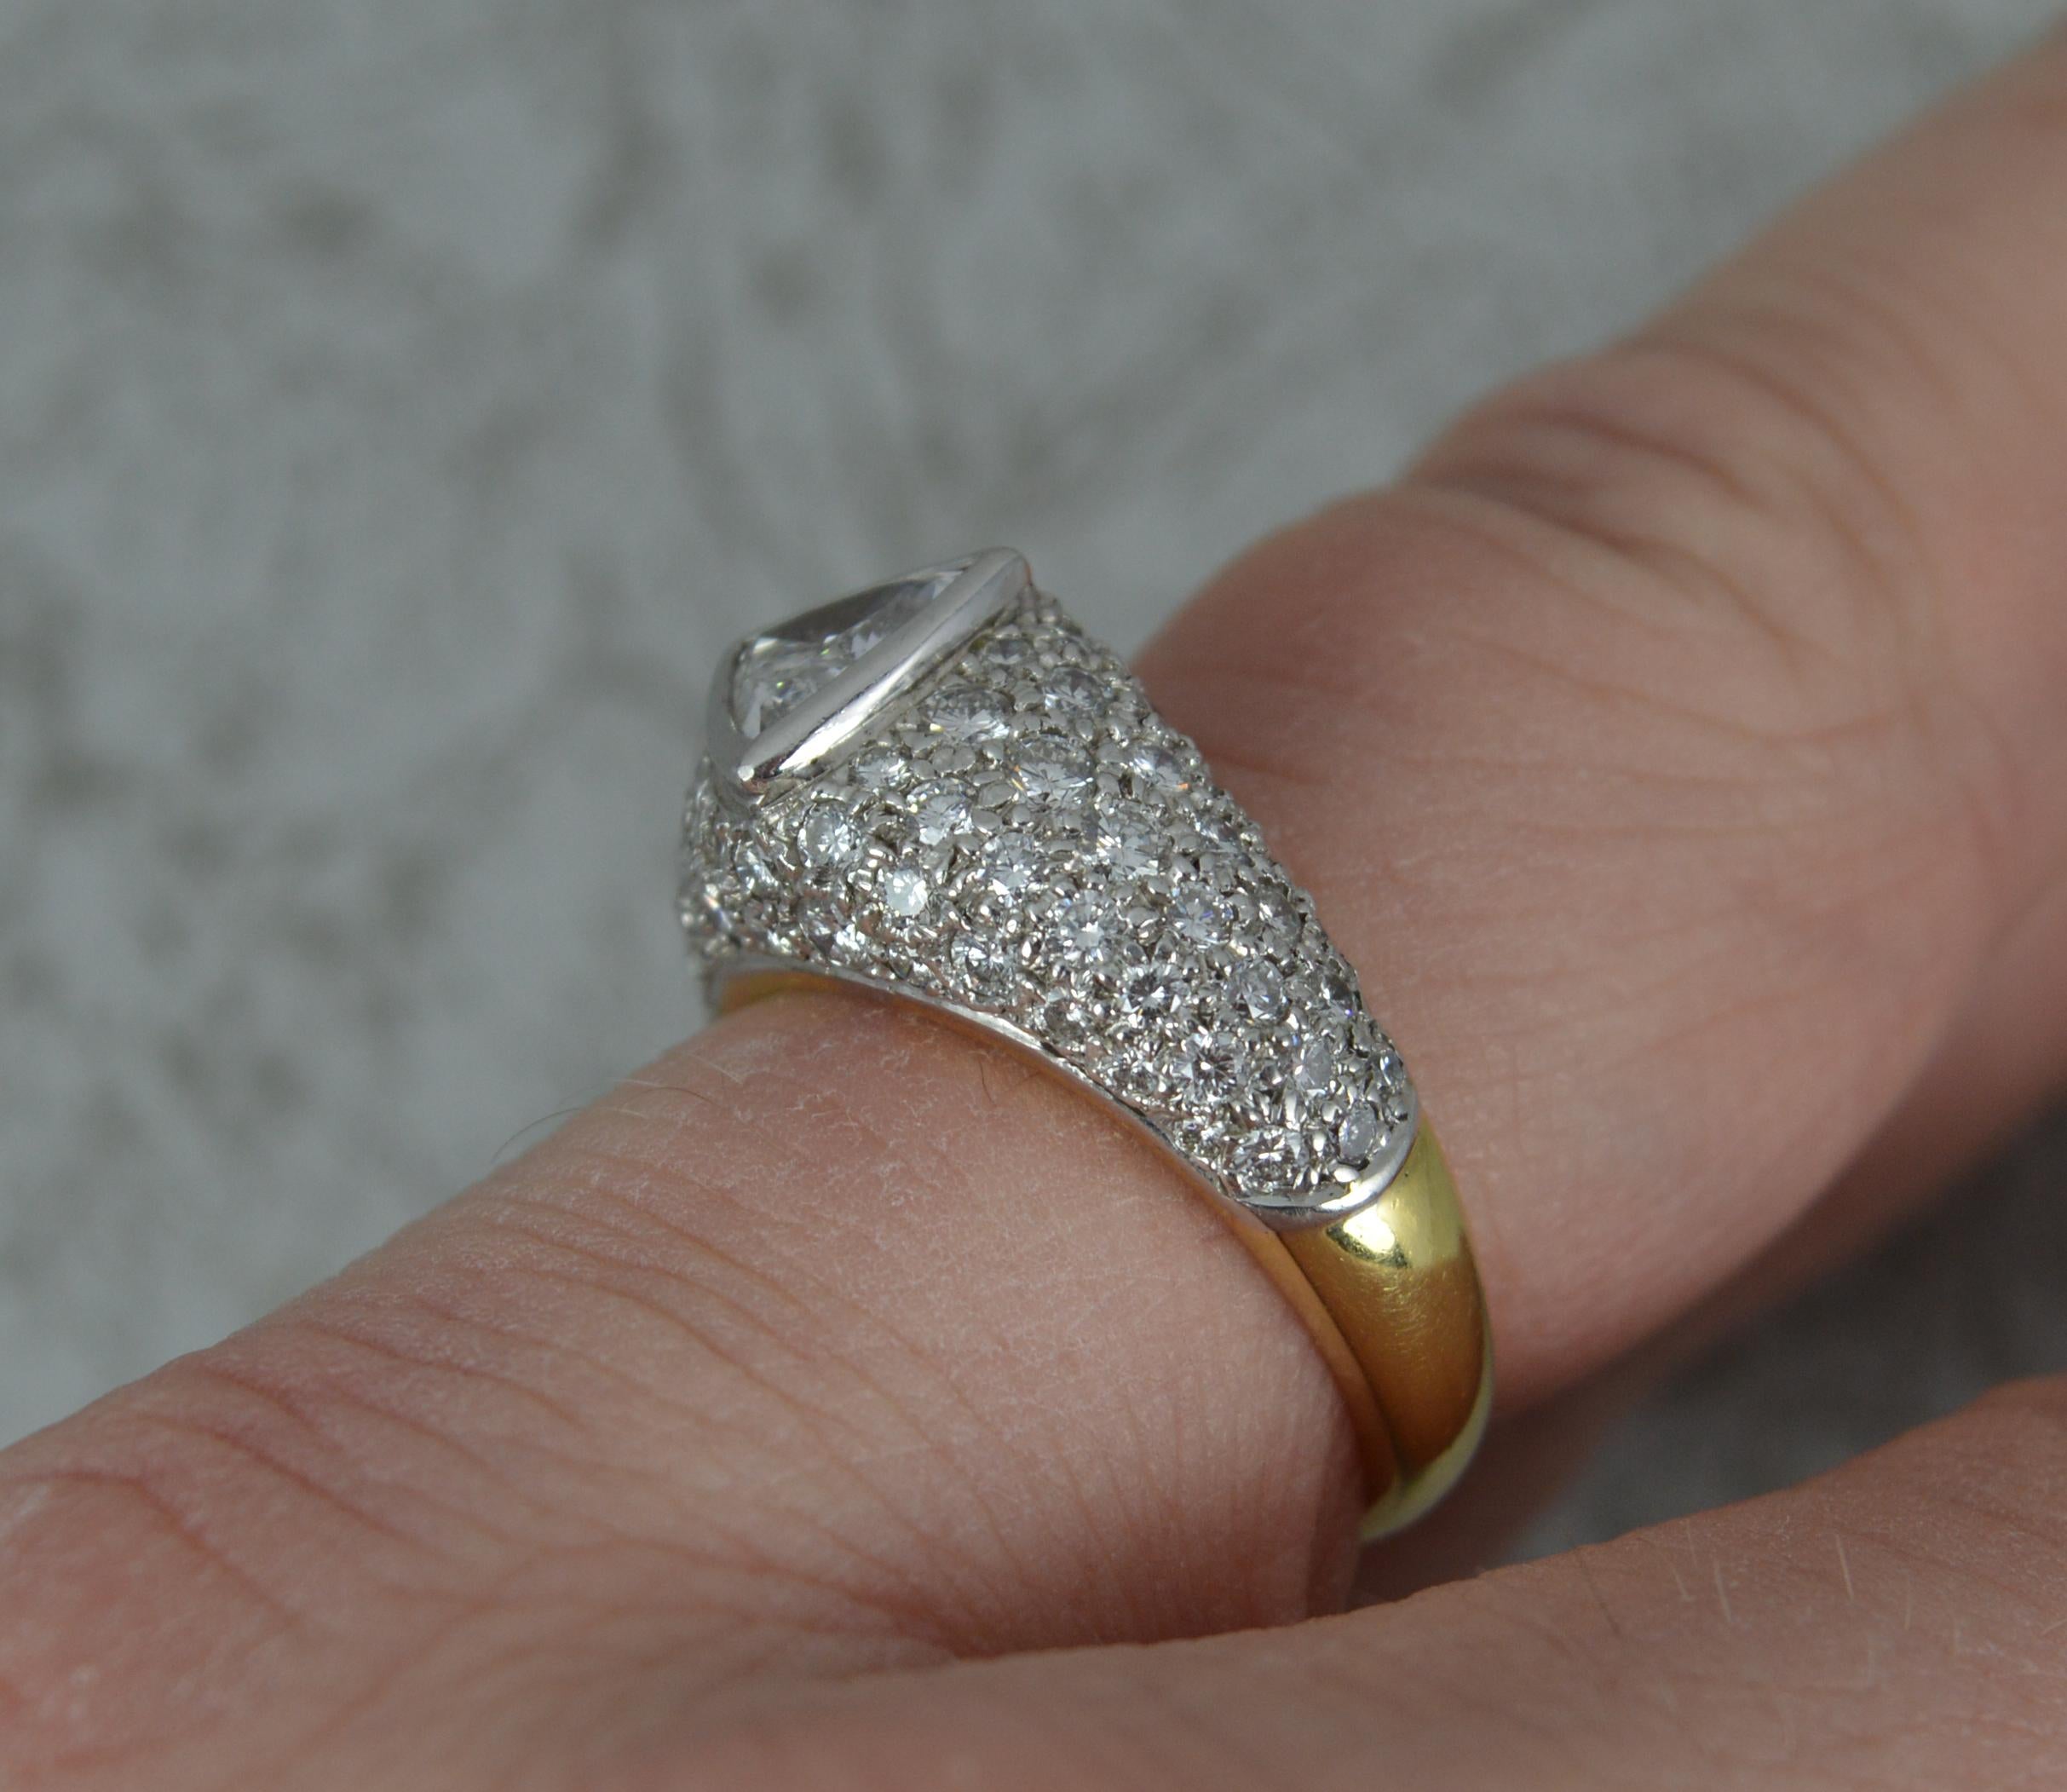 2 carat trillion cut diamond ring